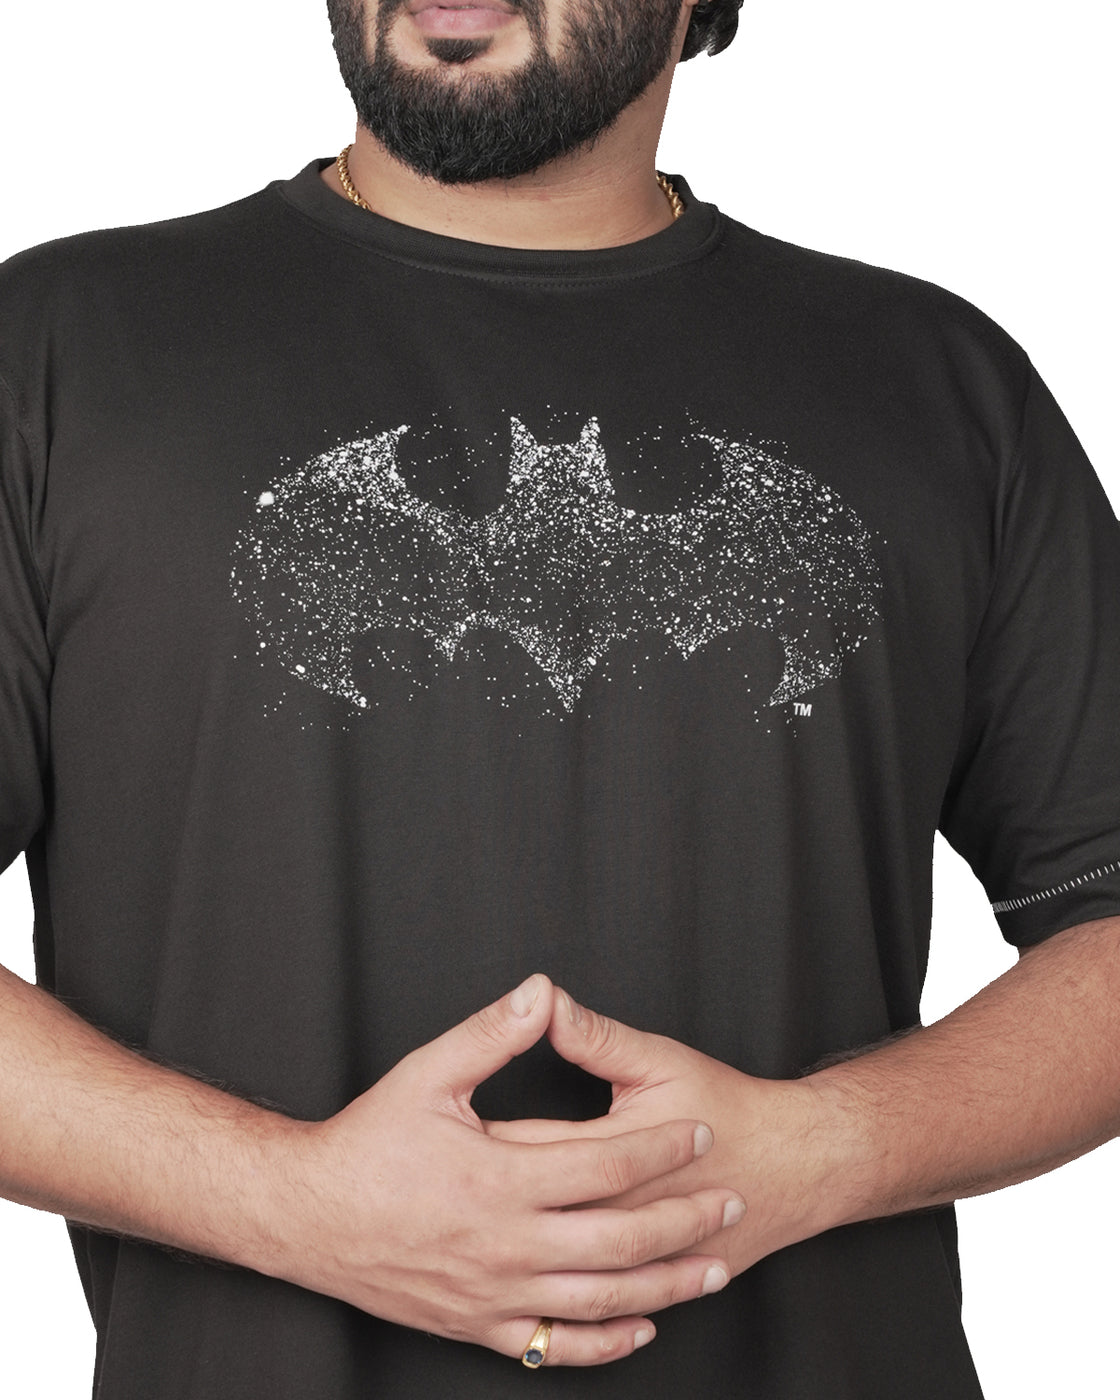 Batman Graphic Print T-Shirt by D555